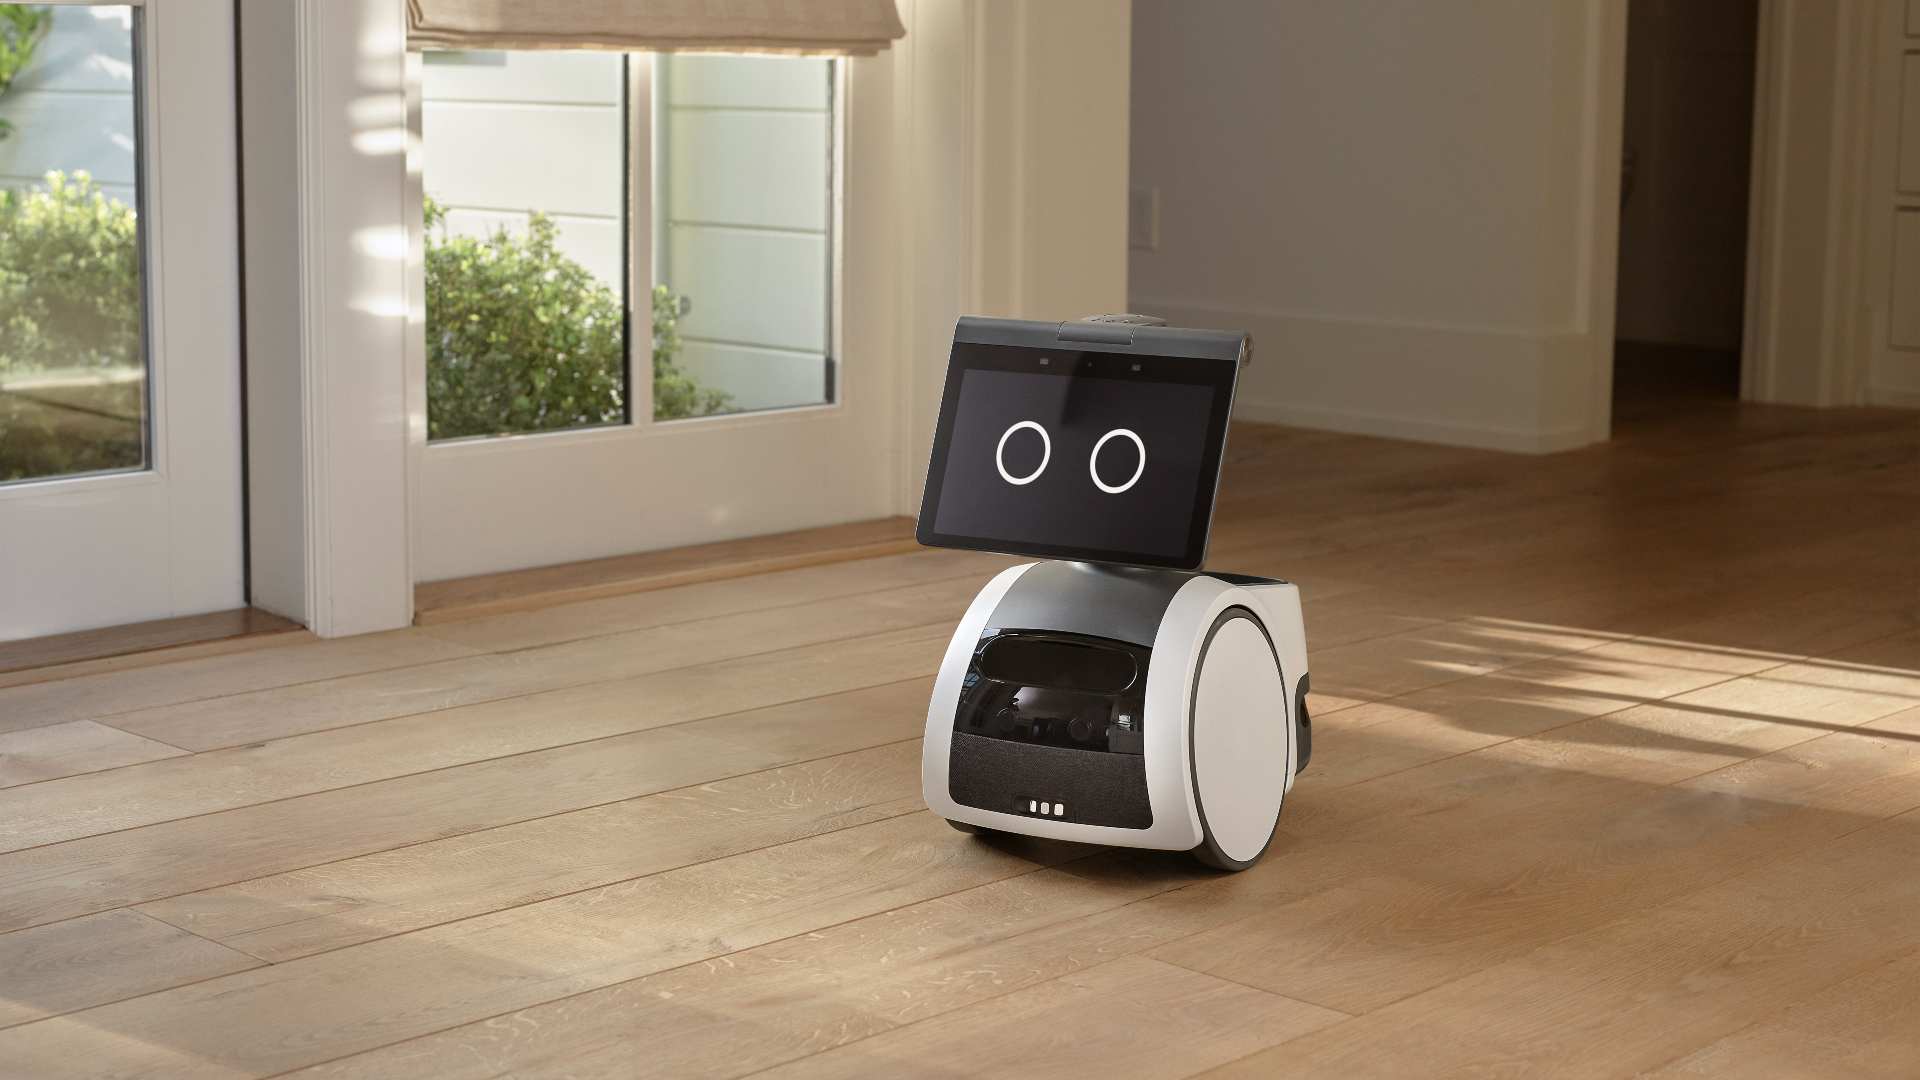 The Amazon Astro robot will guard homes and provide a portable Alexa experience. Image: Amazon